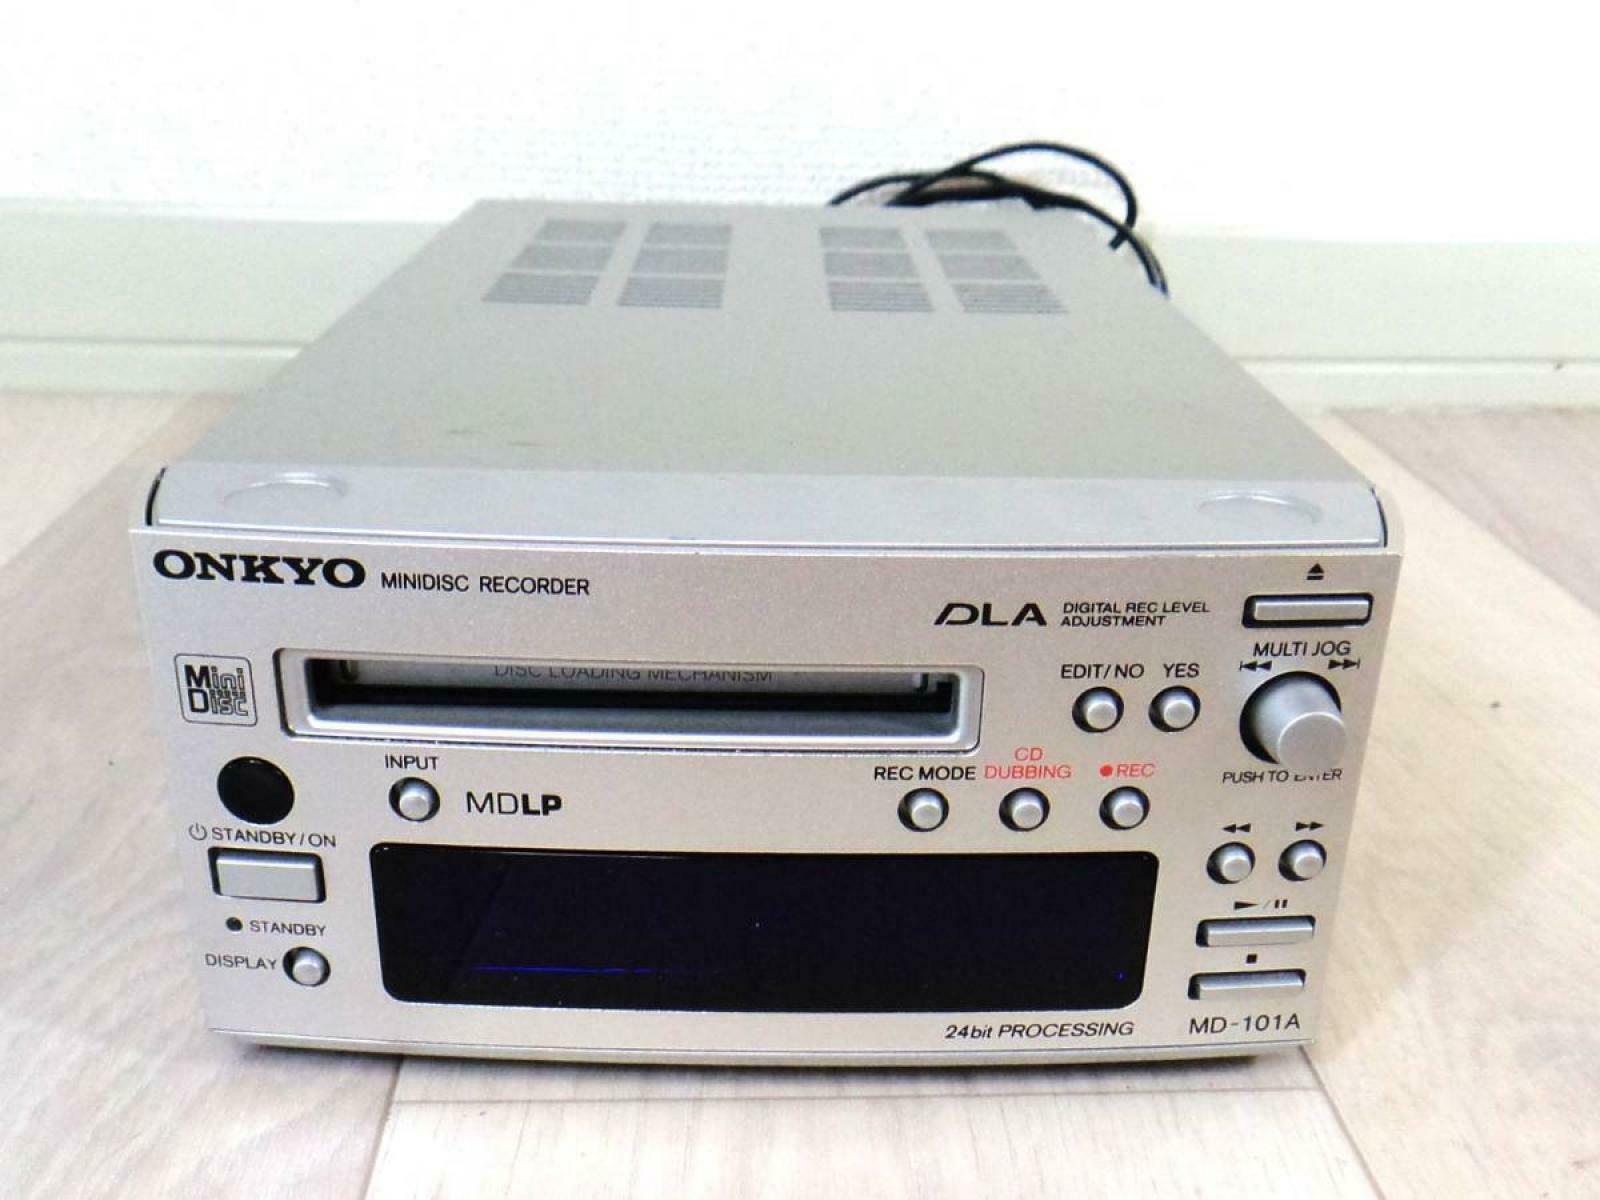 Onkyo Md-101a Intec 155 Md Deck Recorder Silver Mdlp 24-bit High Speed Working